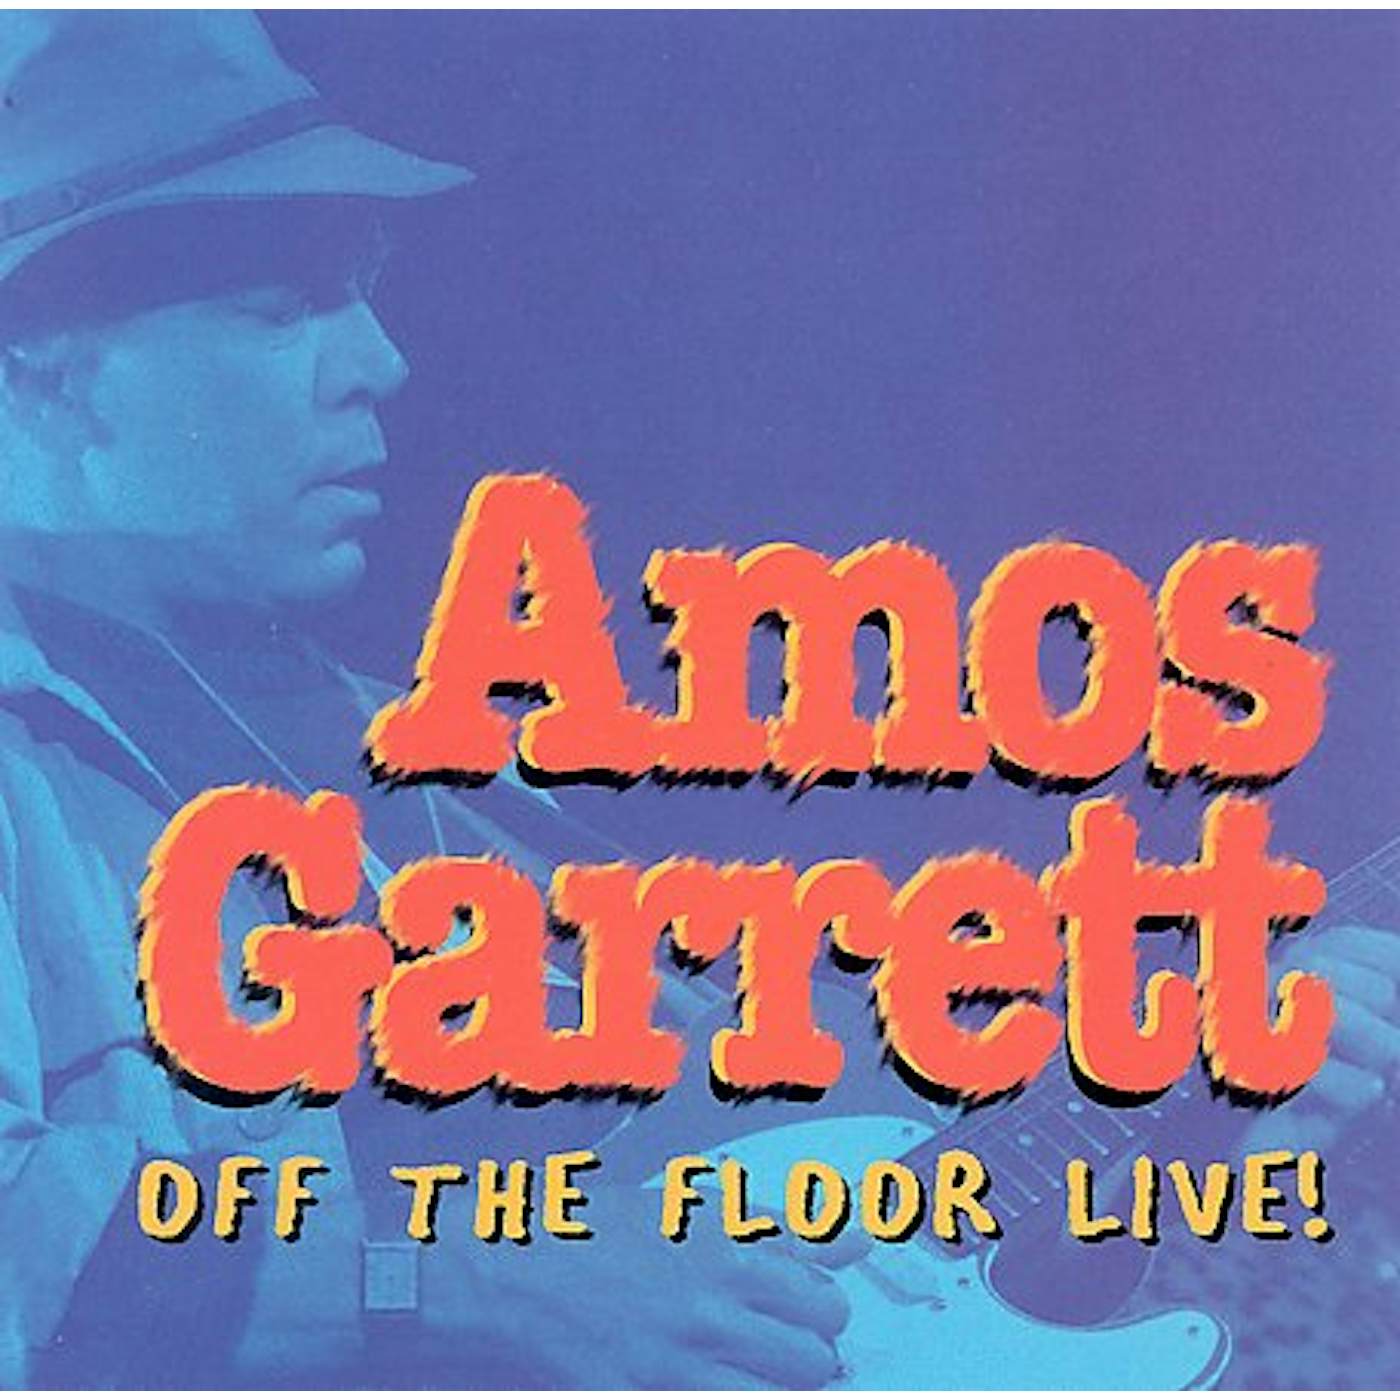 Amos Garrett OFF THE FLOOR LIVE CD